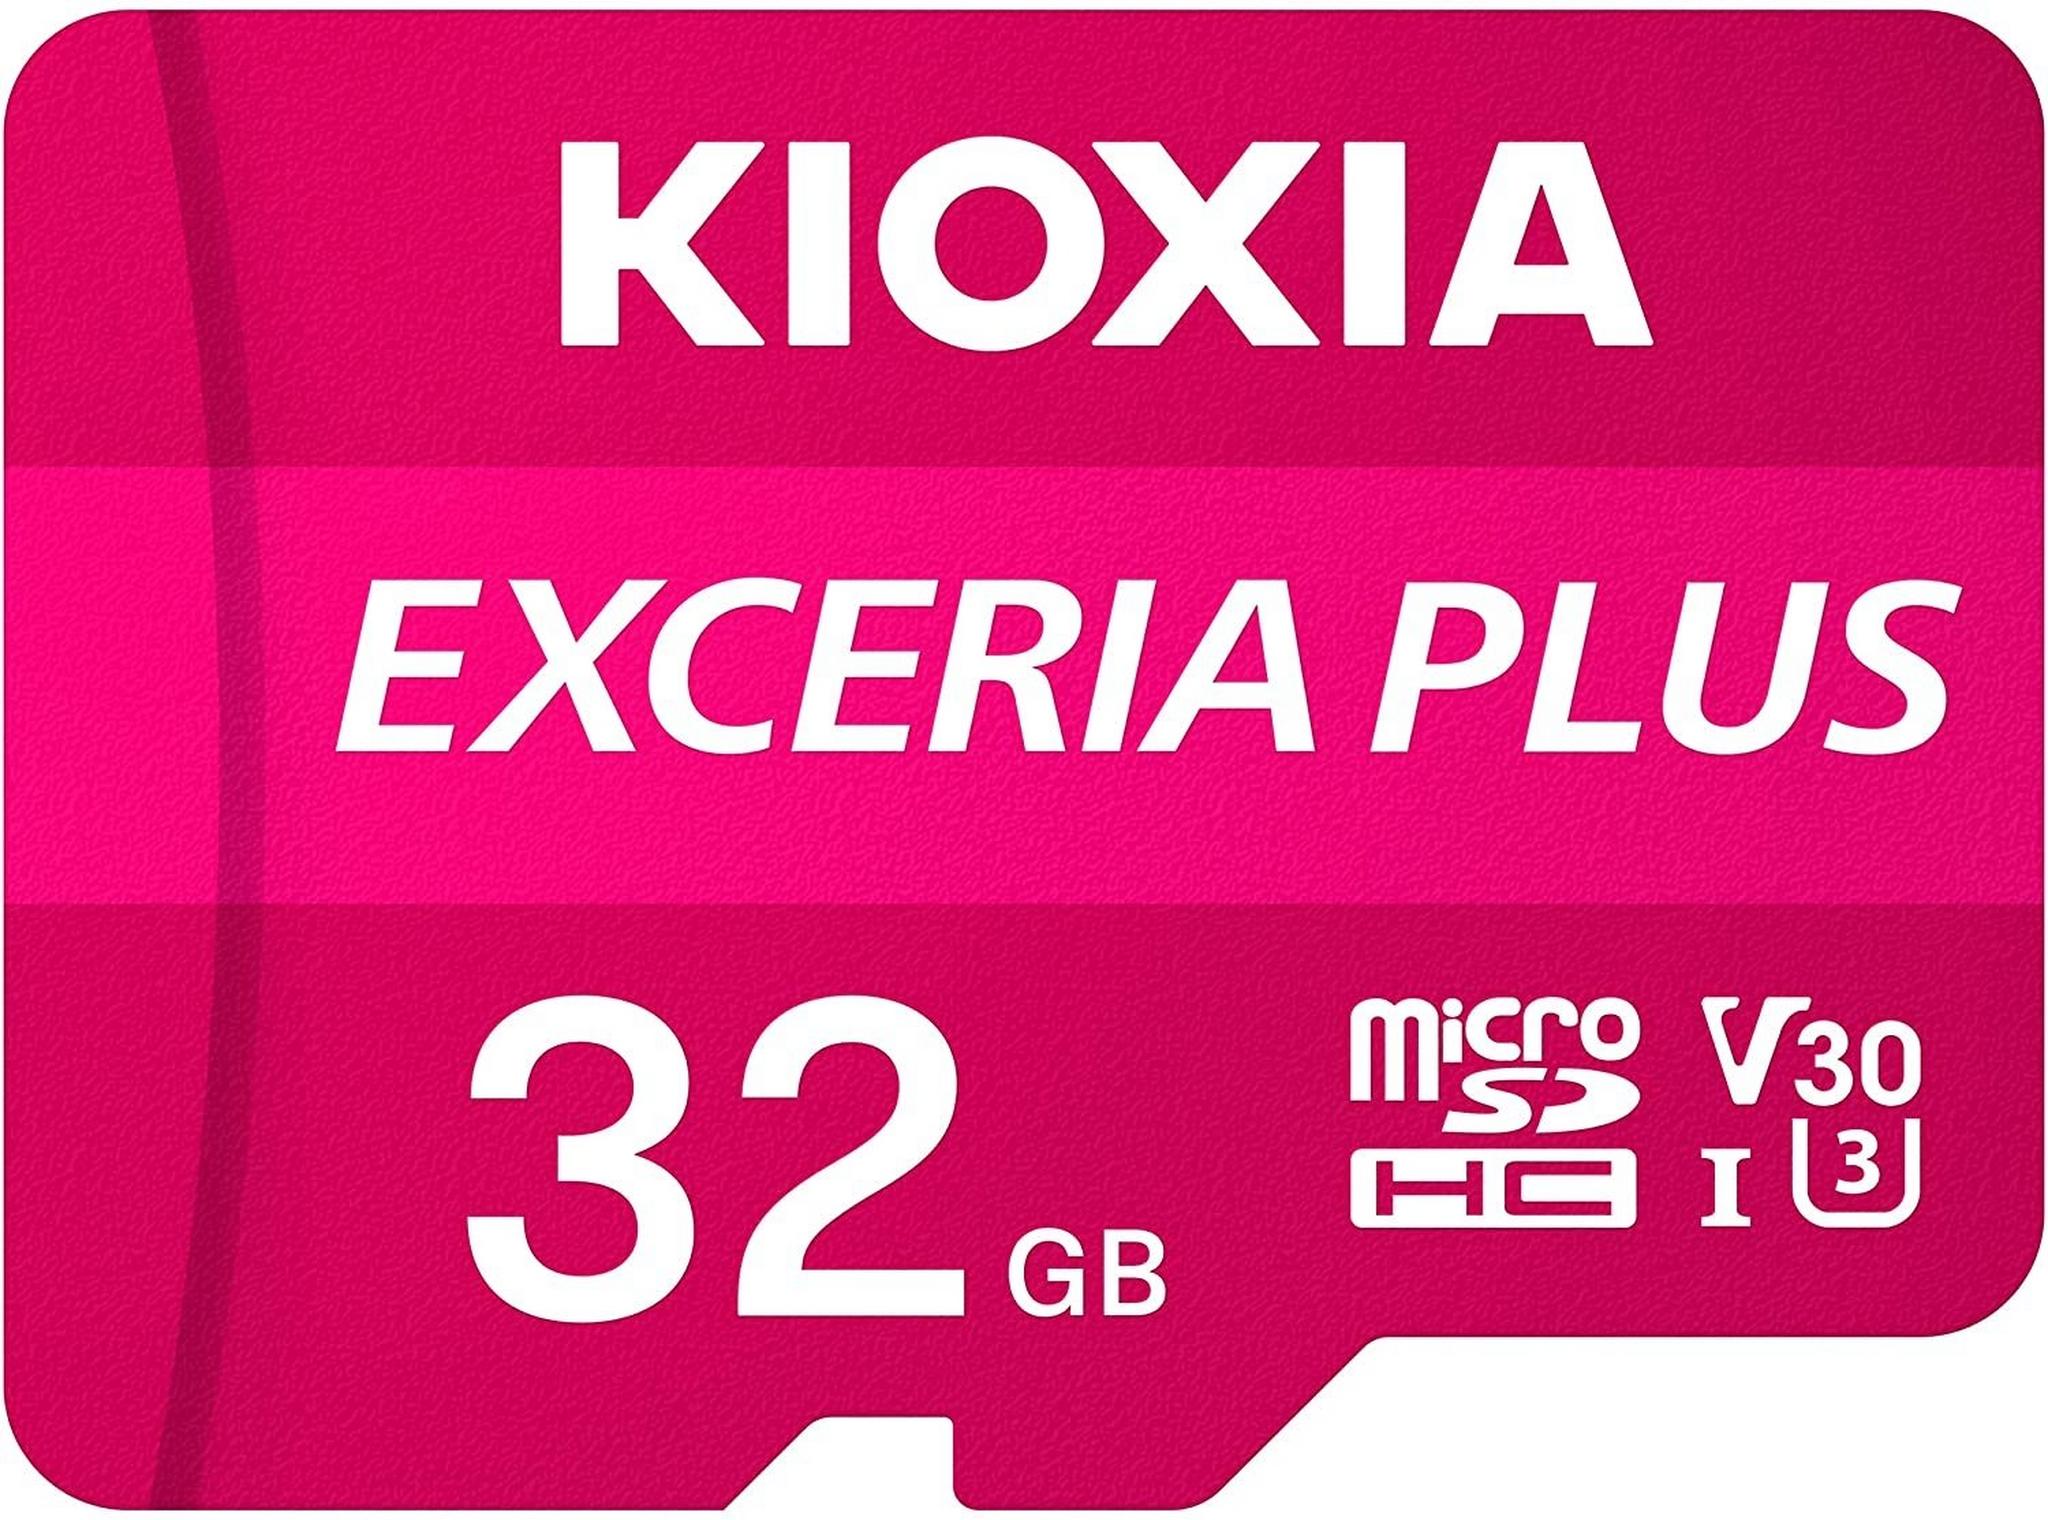 Kioxia Exceria Plus MicroSD 32GB Card